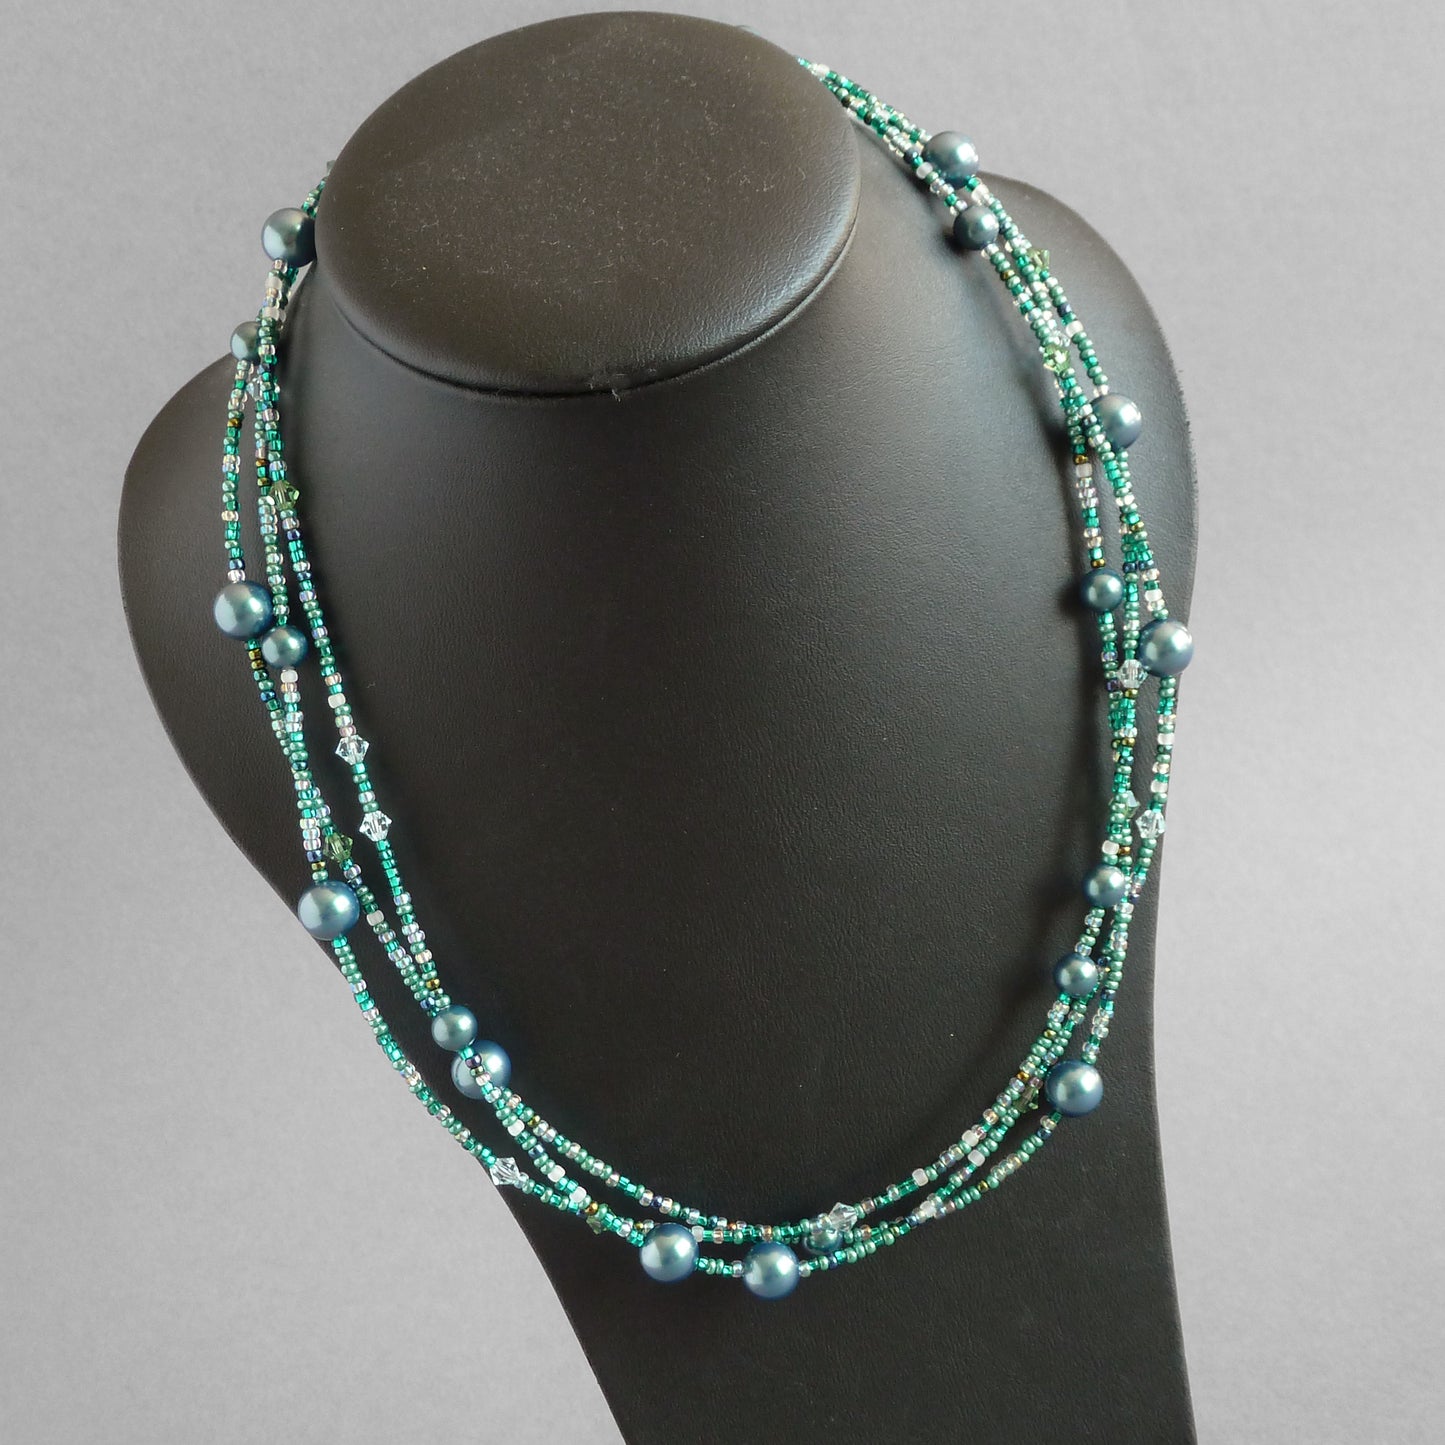 Dark green beaded necklace